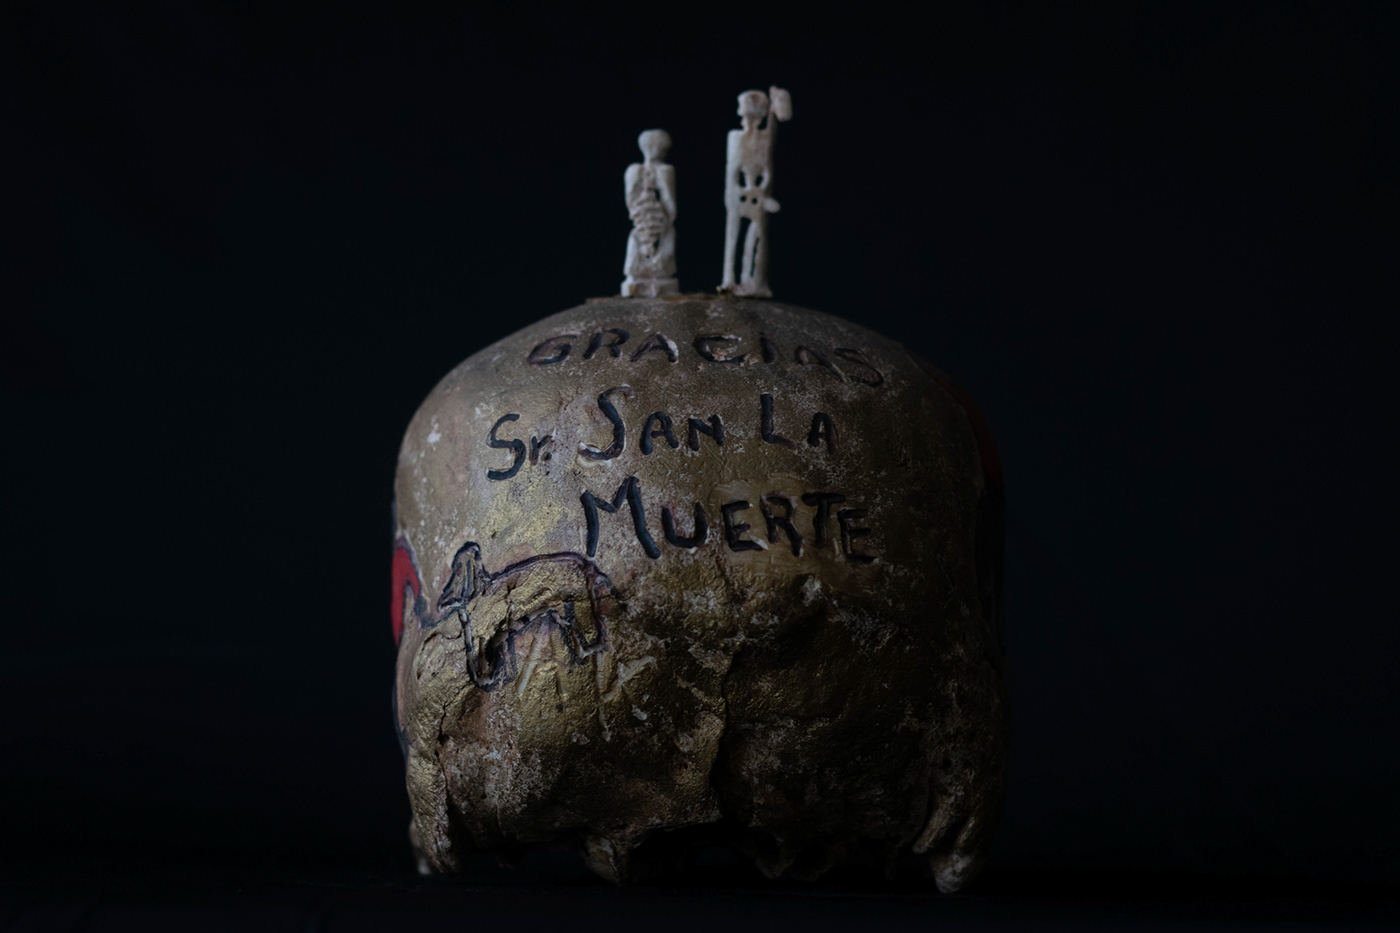 arte bones calavera culto Huesos rito sagrado San La Muerte skull textura